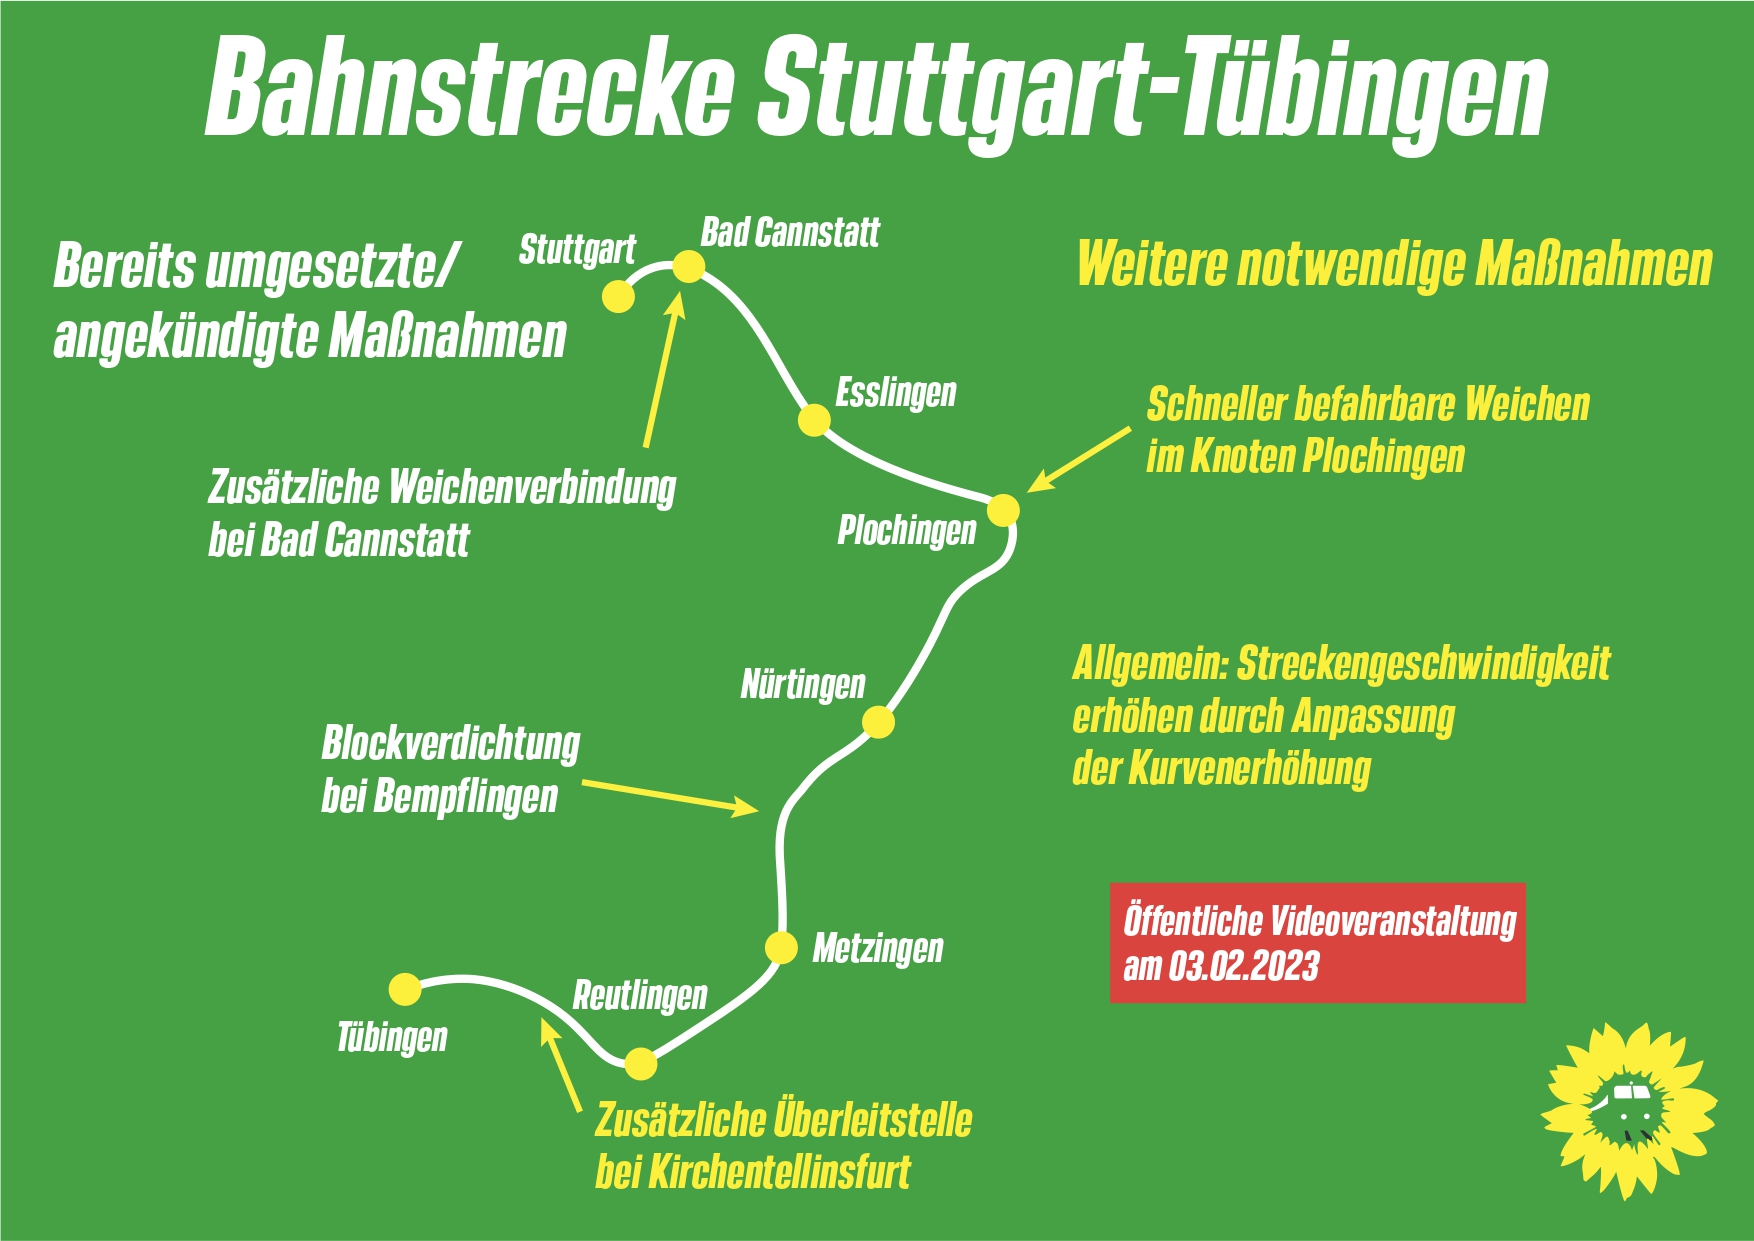 Fachgespräch zum Ausbau der Bahnstrecke Stuttgart-Tübingen